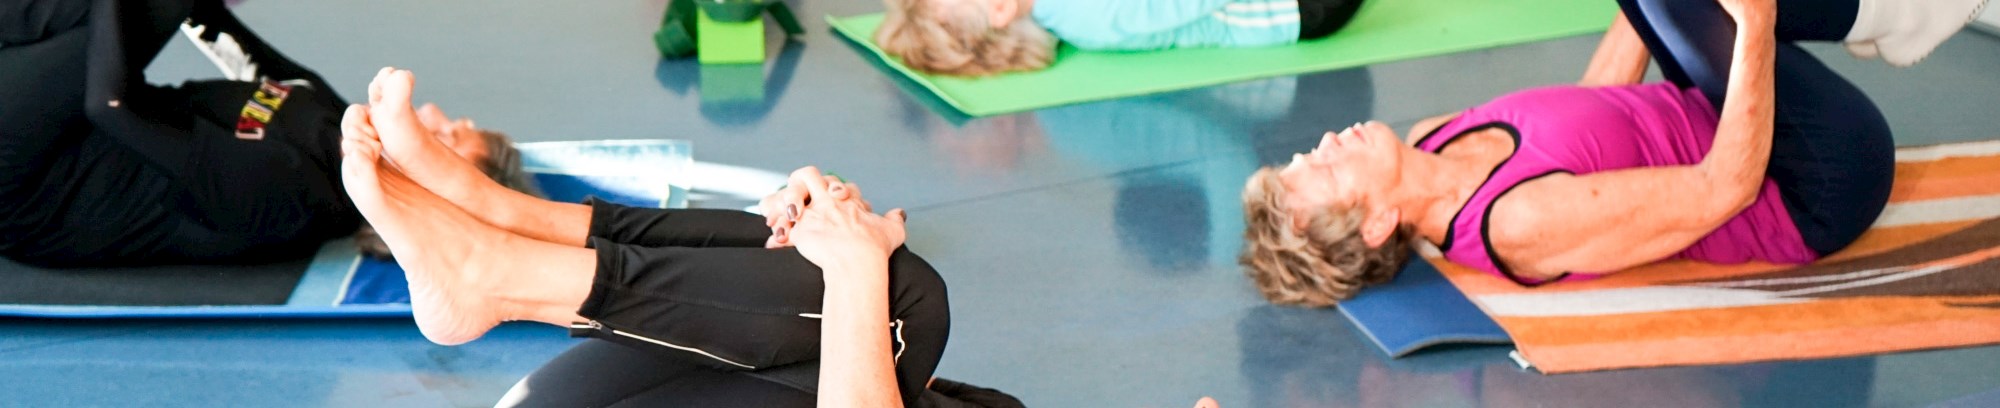 Yoga for seniorer | FOF Københavns Omegn